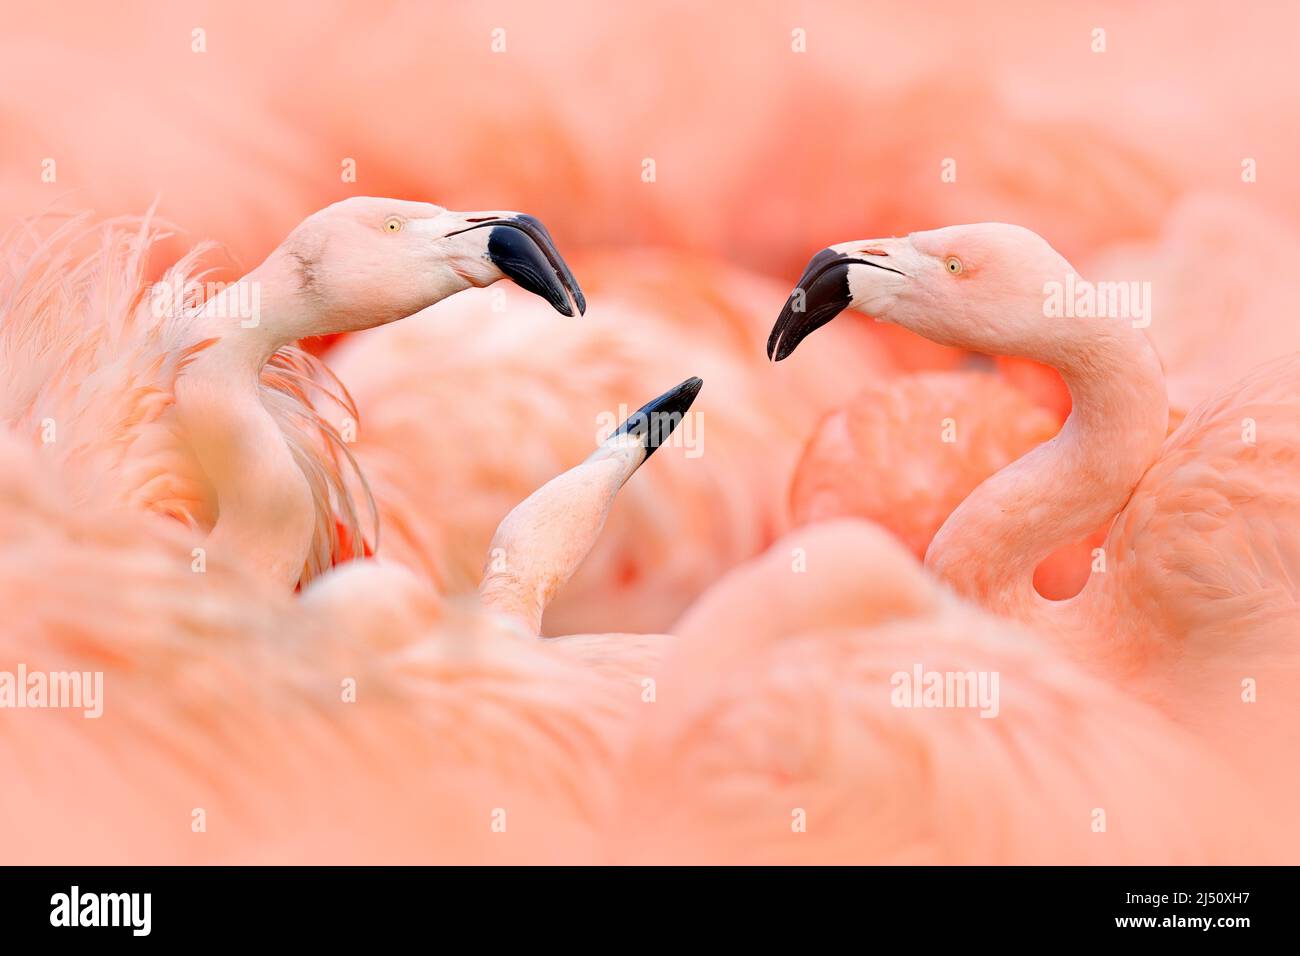 Flamingokampf. Amerikanischer Flamingo, Phoenicopterus rubernice, rosafarbener großer Vogel, tanzt im Wasser, Tier in der Natur, Kuba, Karibik. Tierwelt Stockfoto